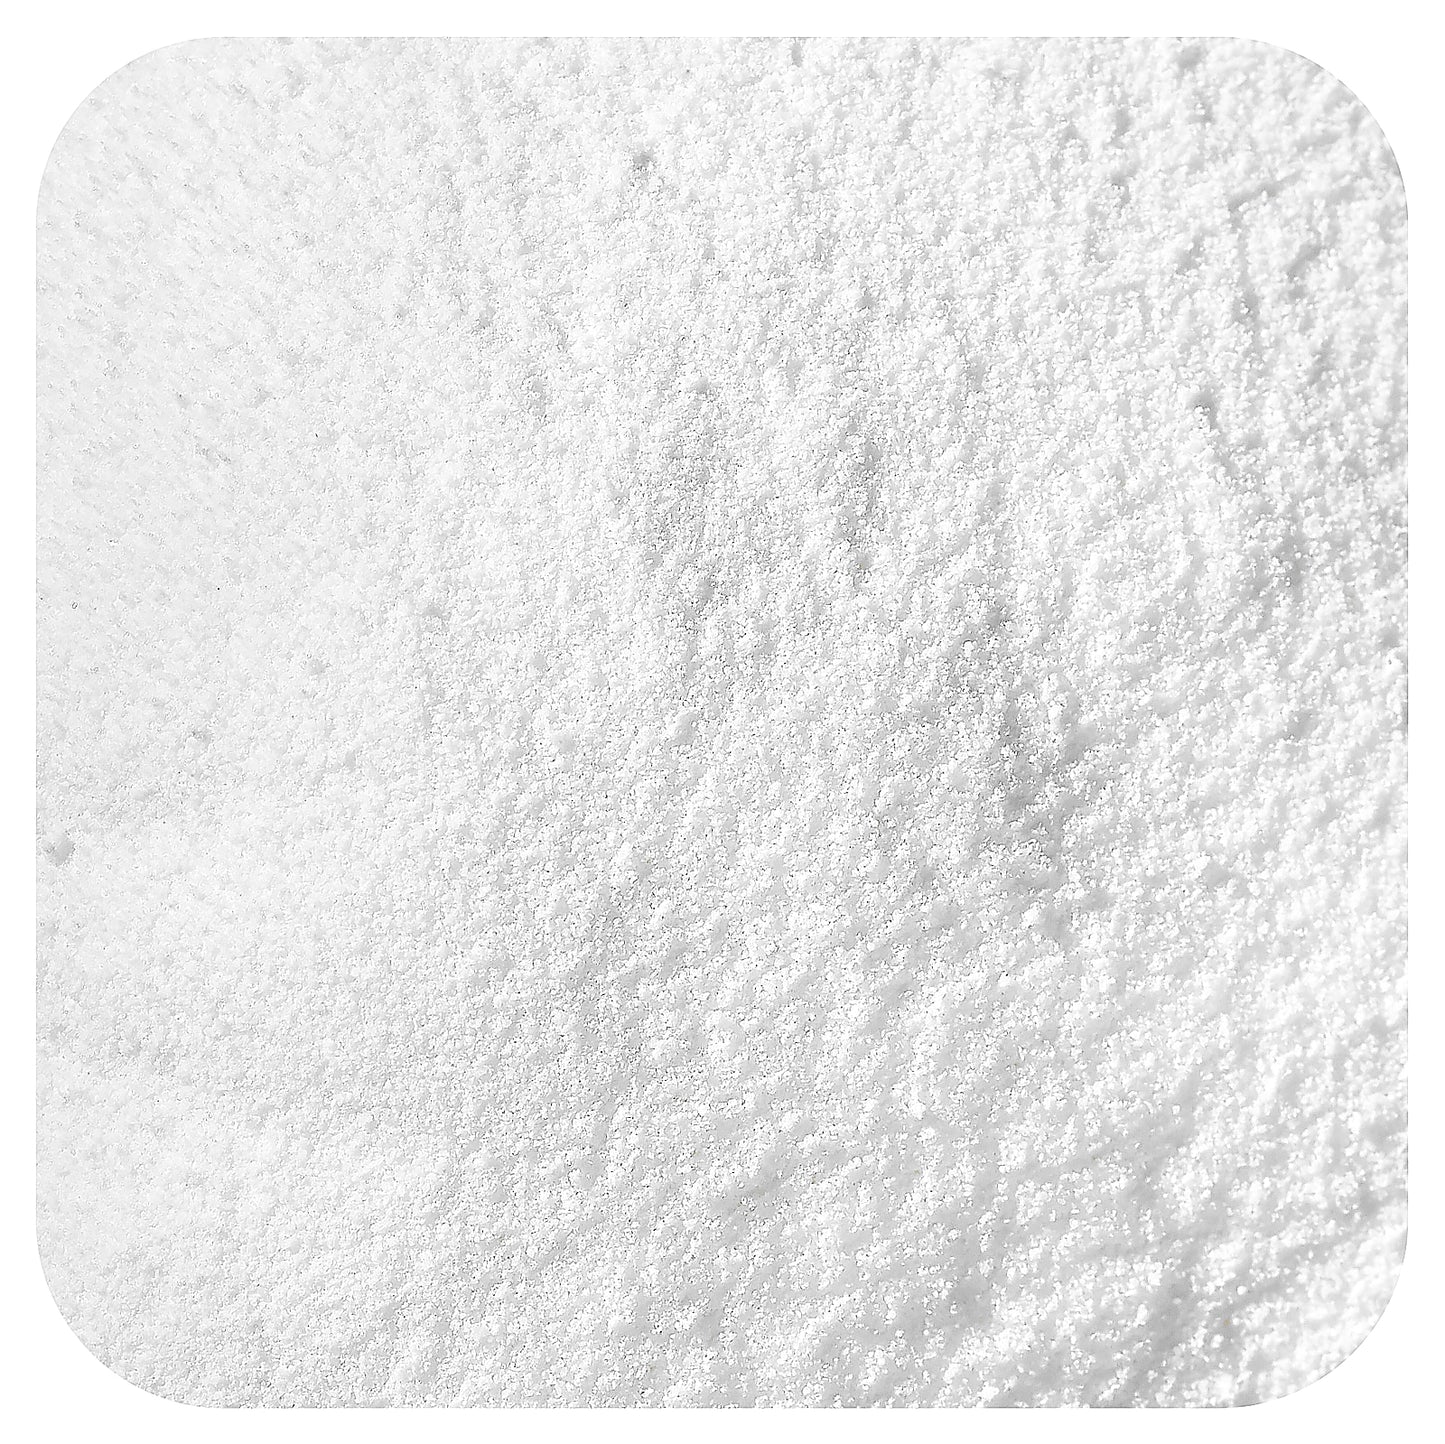 California Gold Nutrition, L-Serine Powder, AjiPure Amino Acid, Unflavored Powder, 1 lb (454 g)